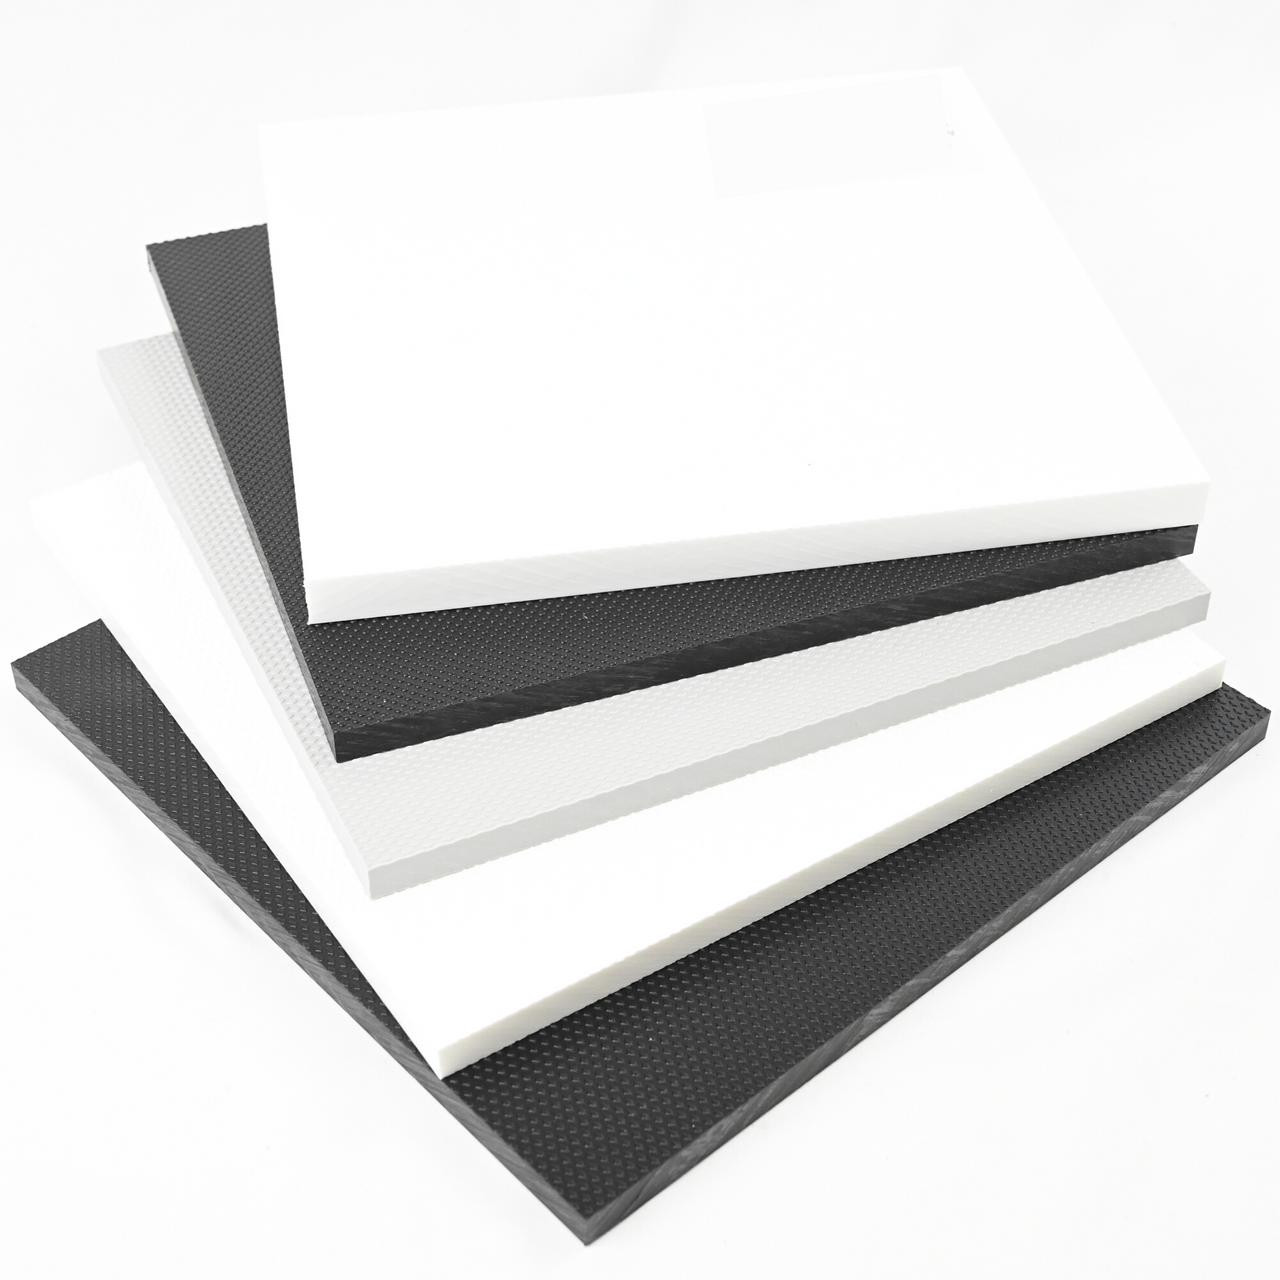 BuyPlastic White Professional HDPE Plastic Cutting Board 3/4 inch x 18 inch x 24 inch, Size: 18 x 24